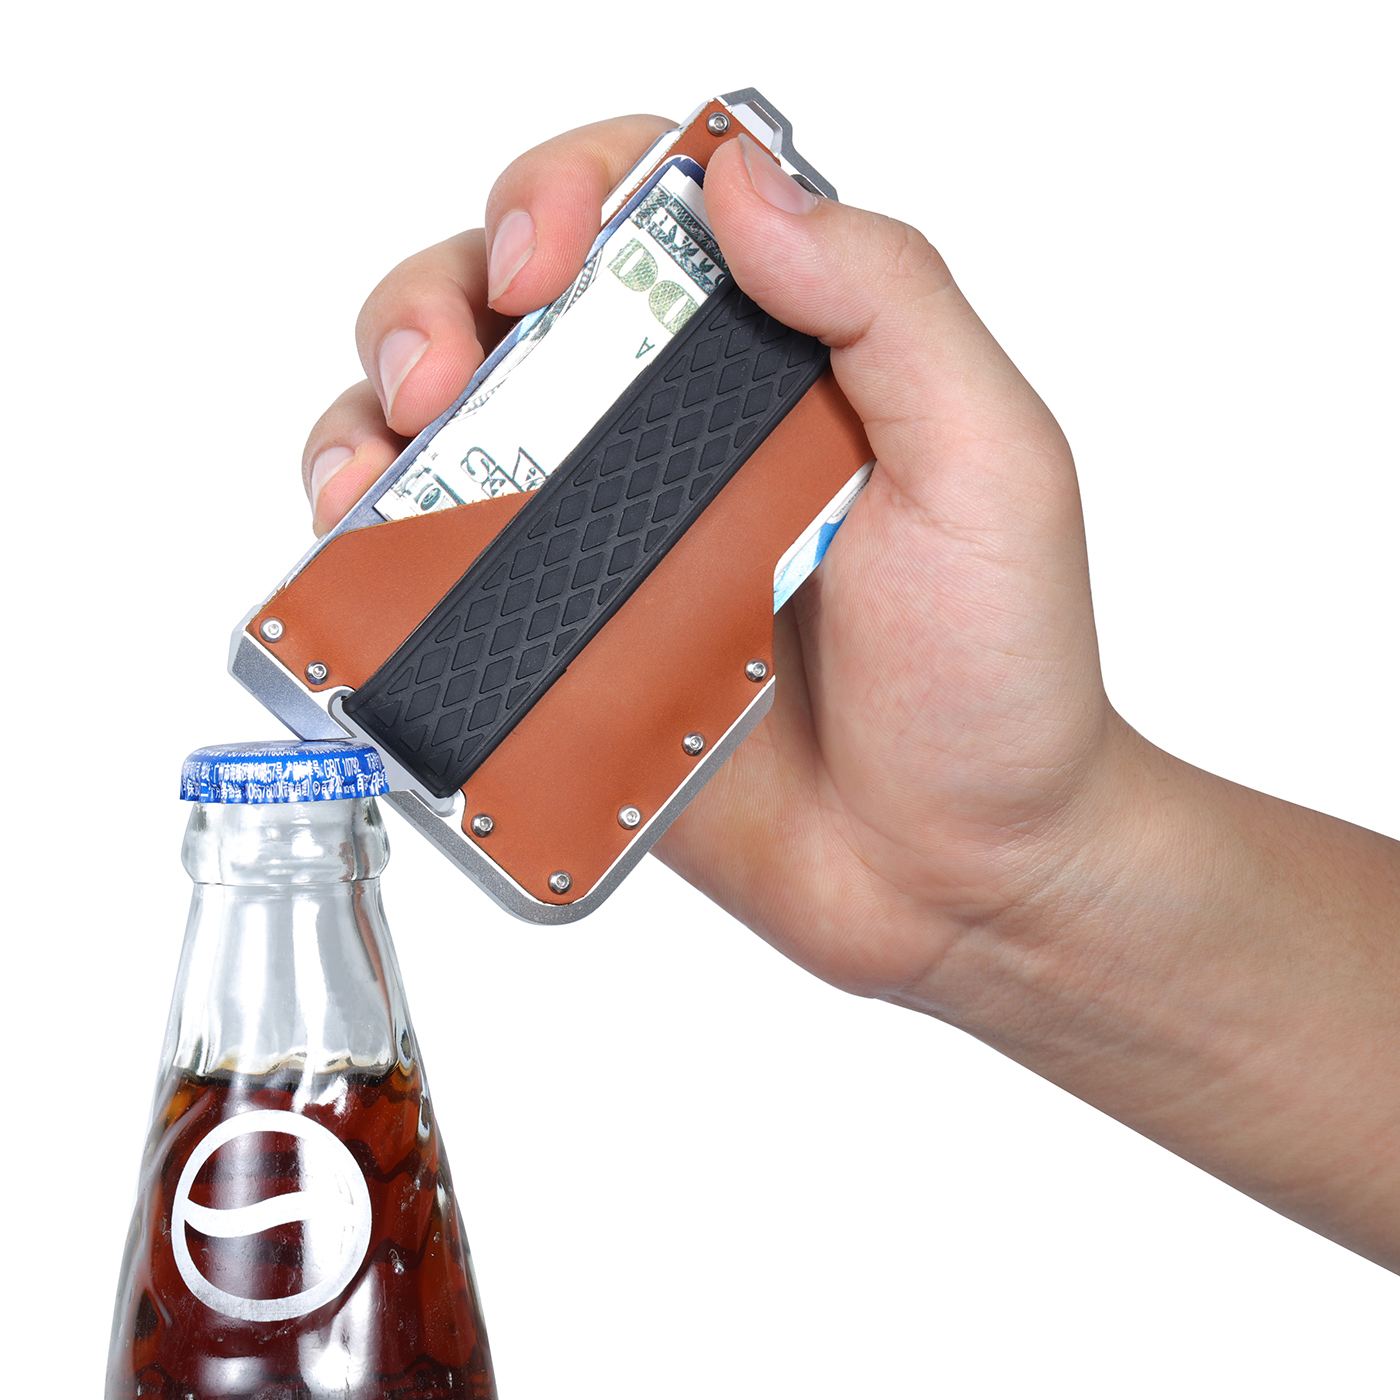 2020 New Patent Design Auto Pop up Slim Aluminum Credit Card Holder Mens RFID Block Wallet Business Metal Card Wallet